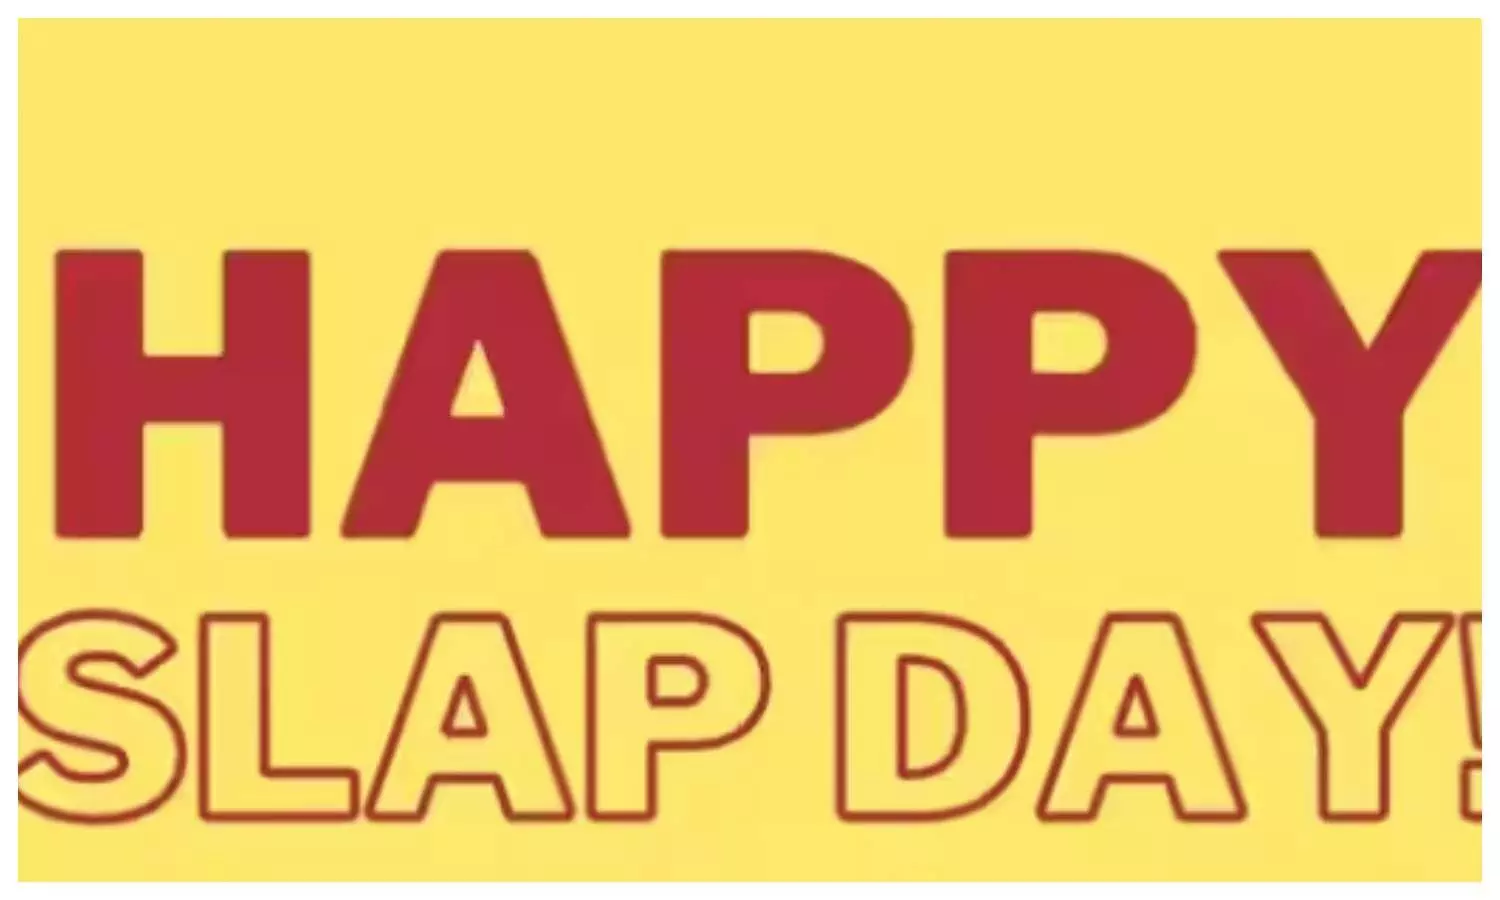 Happy Slap Day 2023